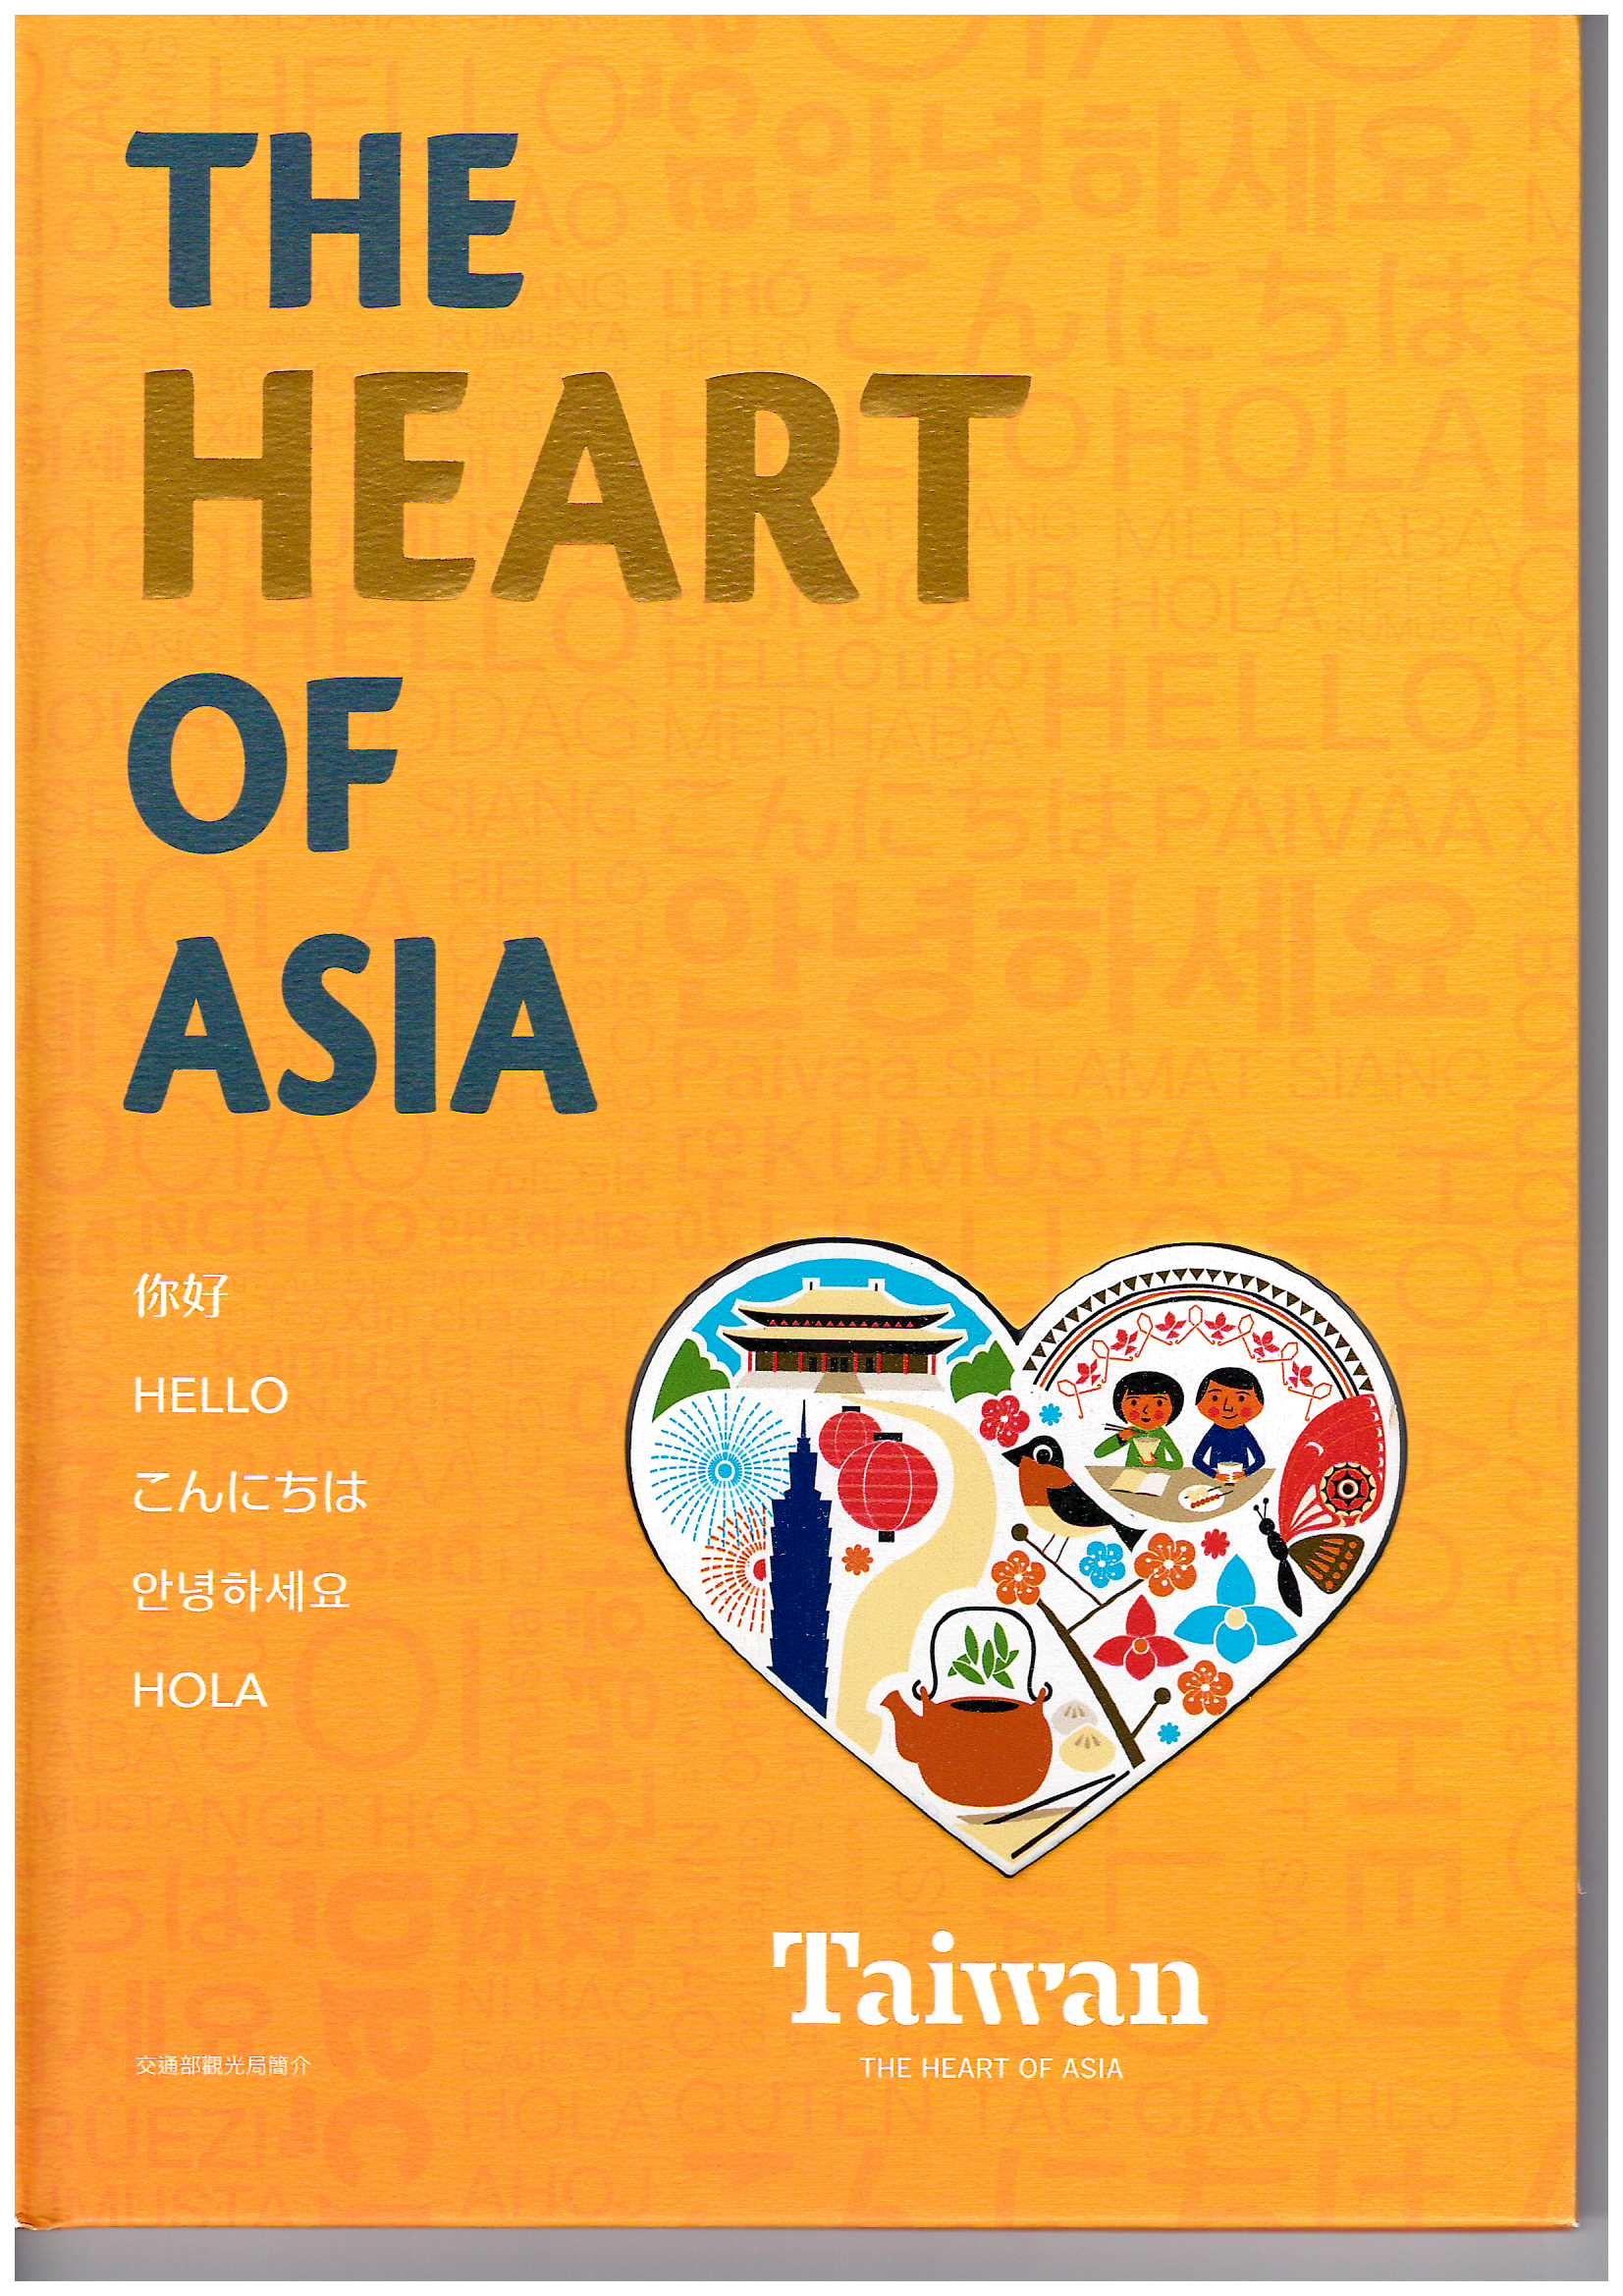 交通部觀光局簡介(2019~2020年版):THE HEART OF ASIA